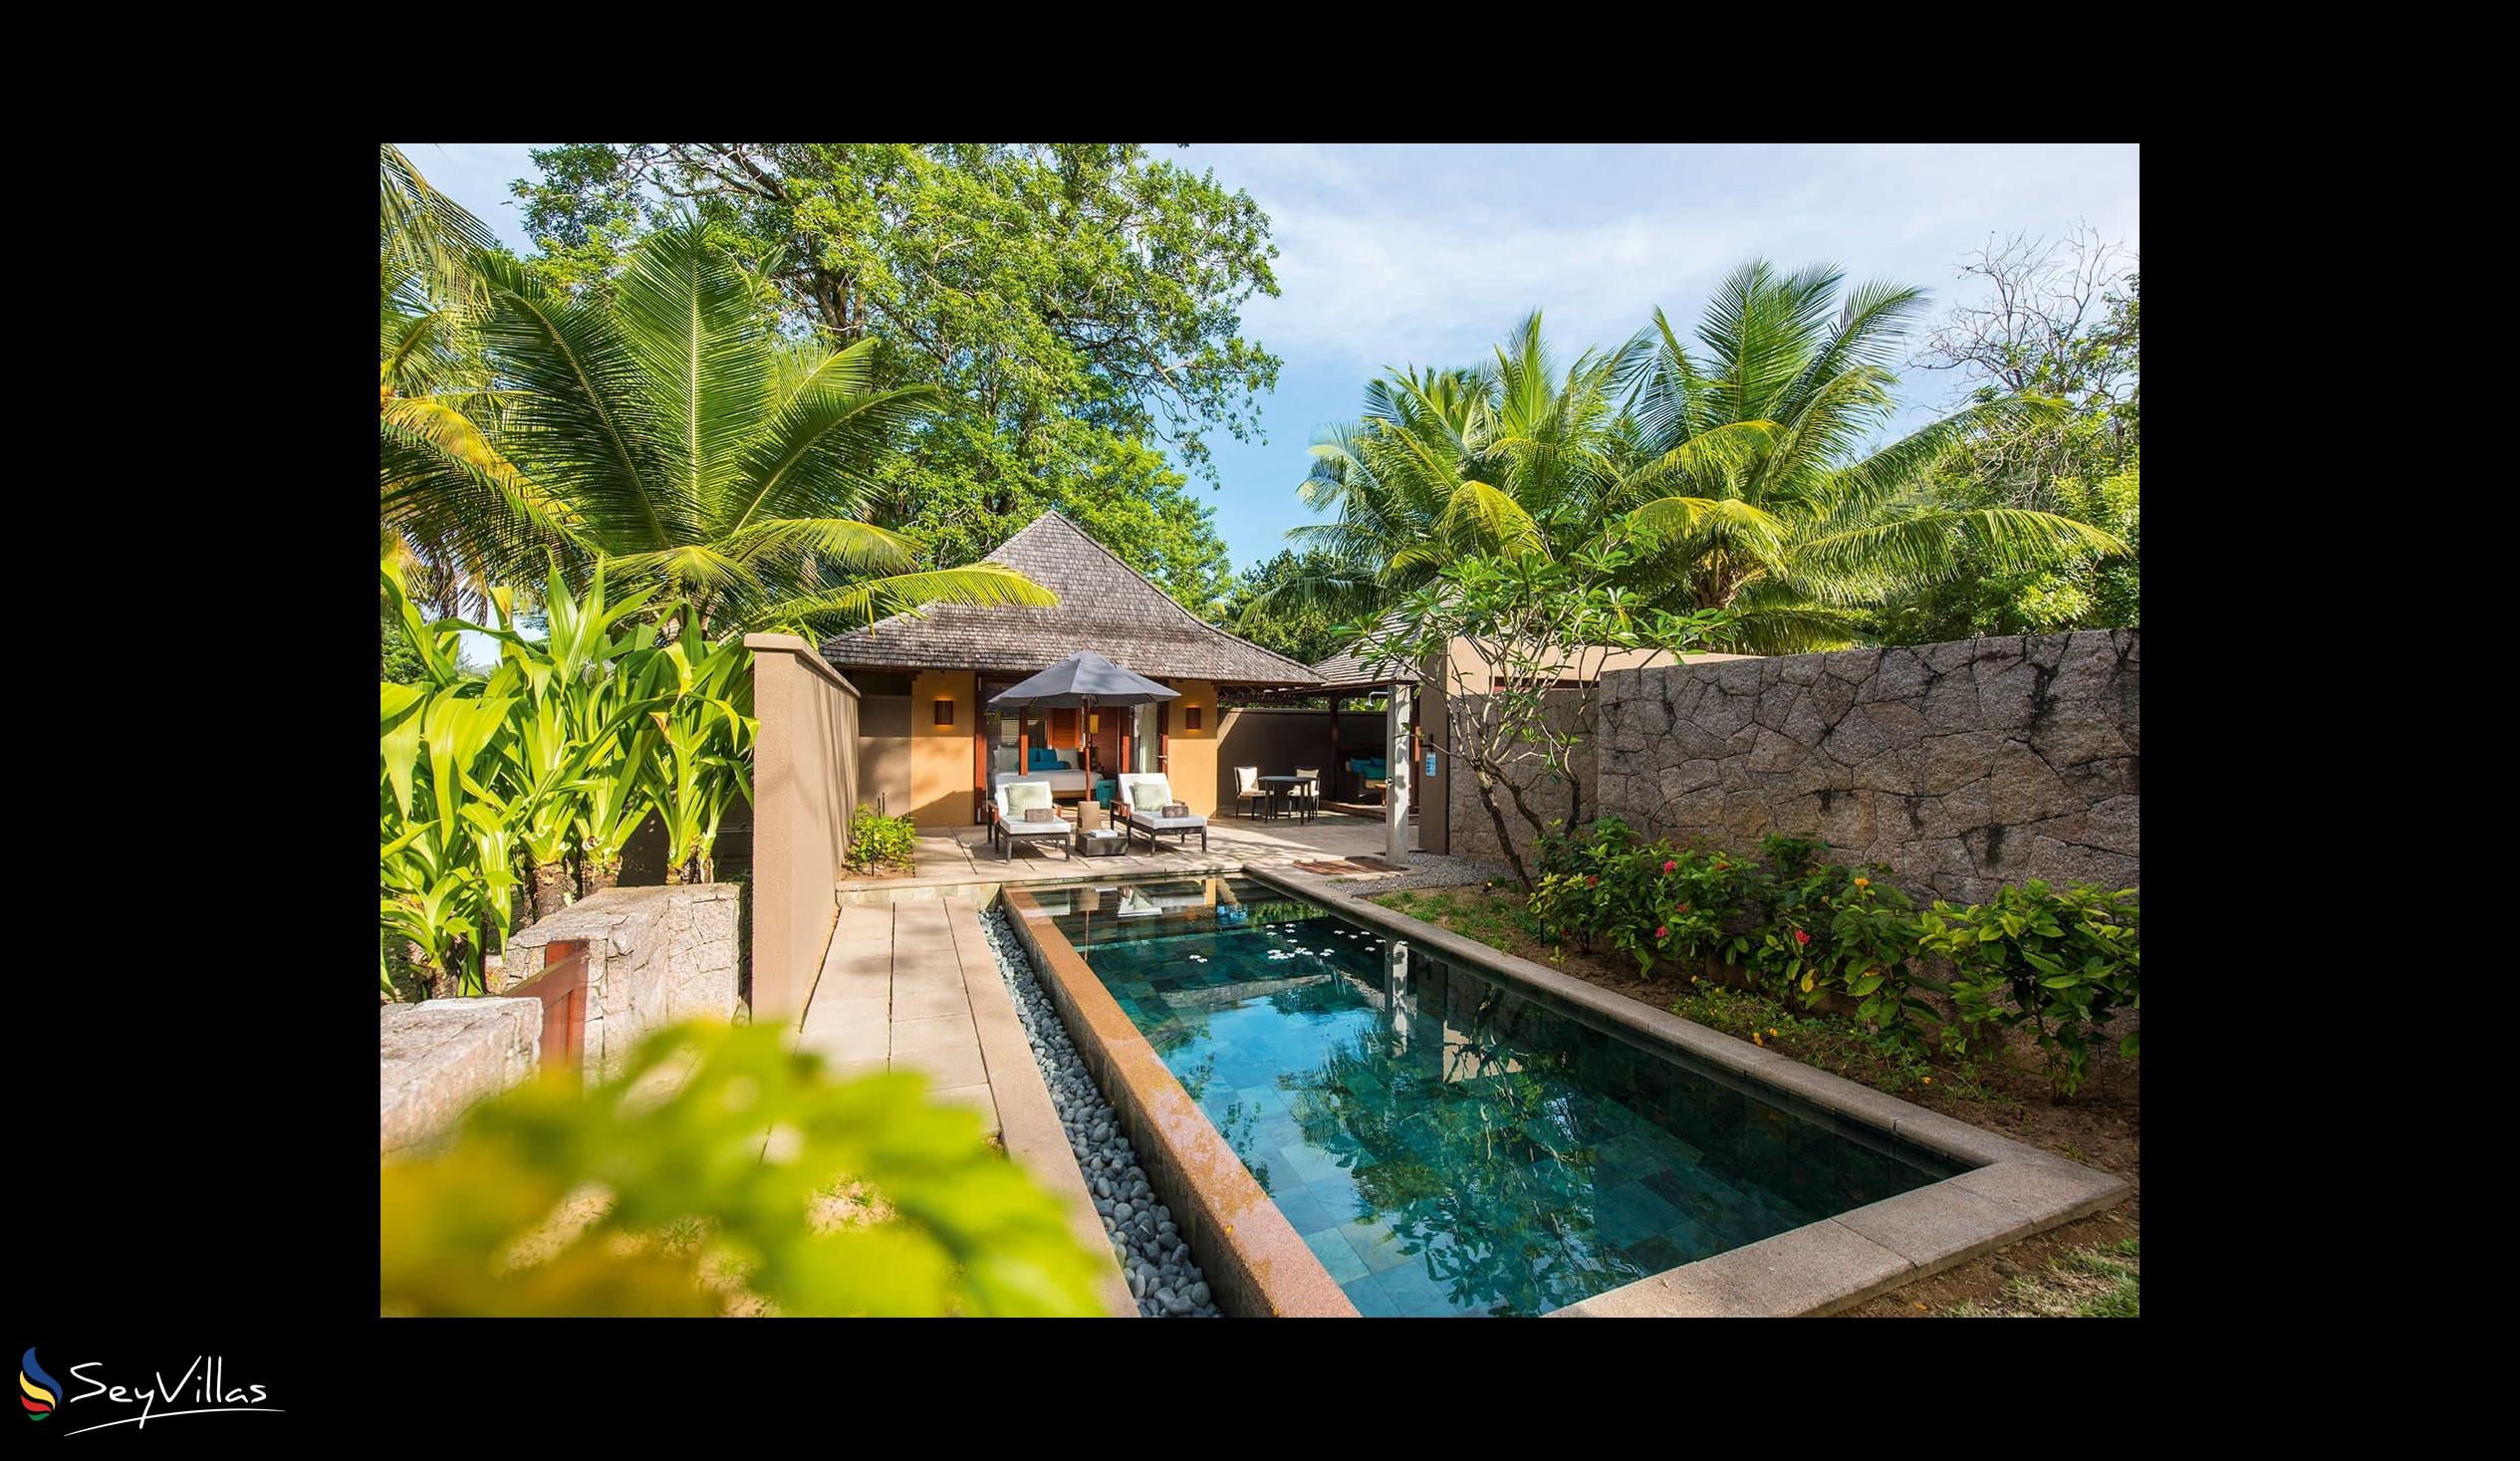 Photo 32: Constance Ephelia Seychelles - 2-Bedroom Beach Villa - Mahé (Seychelles)